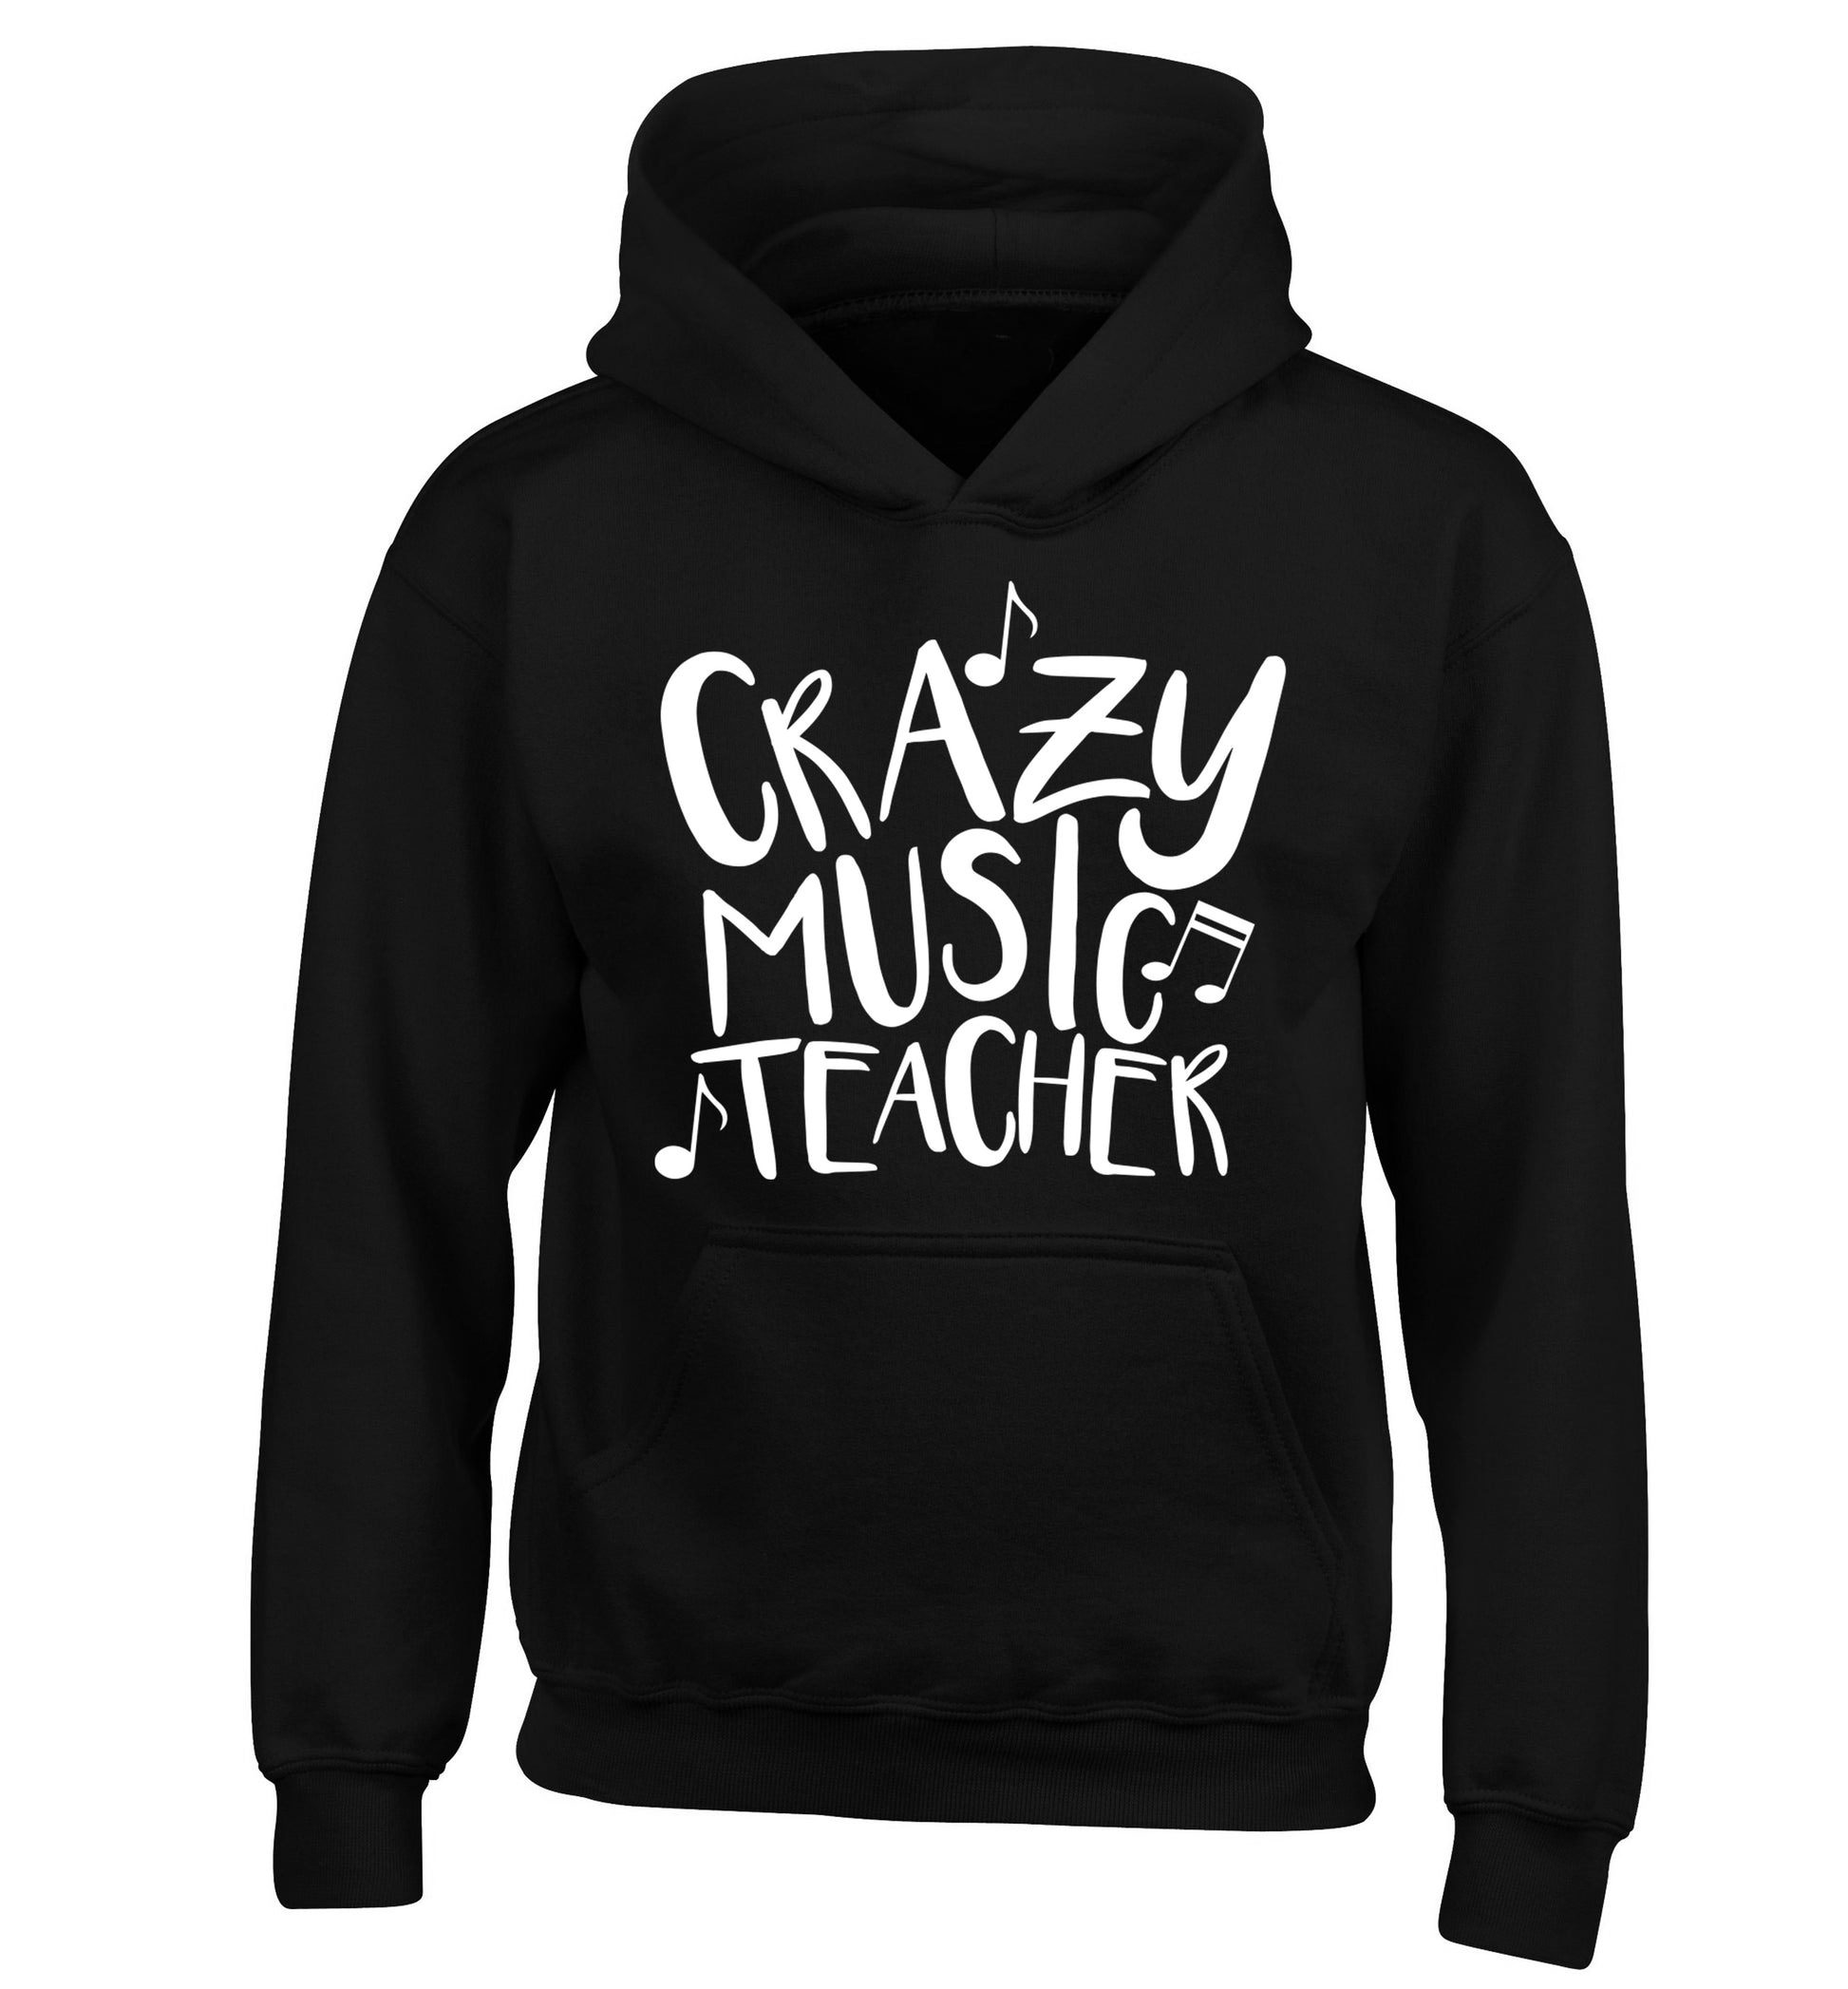 Crazy music teacher children's black hoodie 12-13 Years